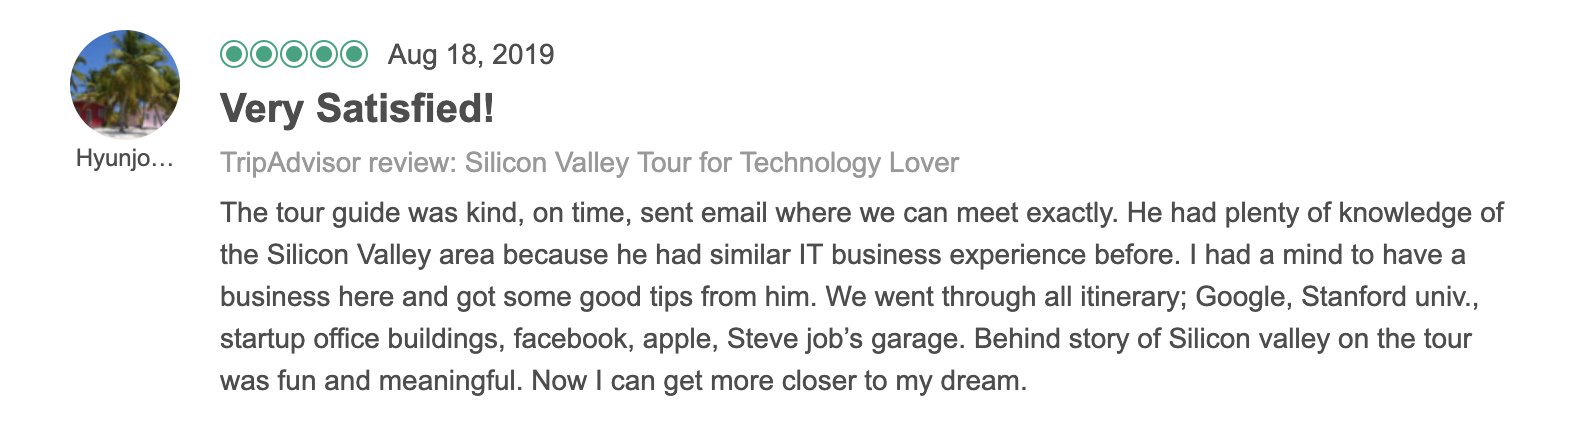 Silicon Valley Tour Review 6